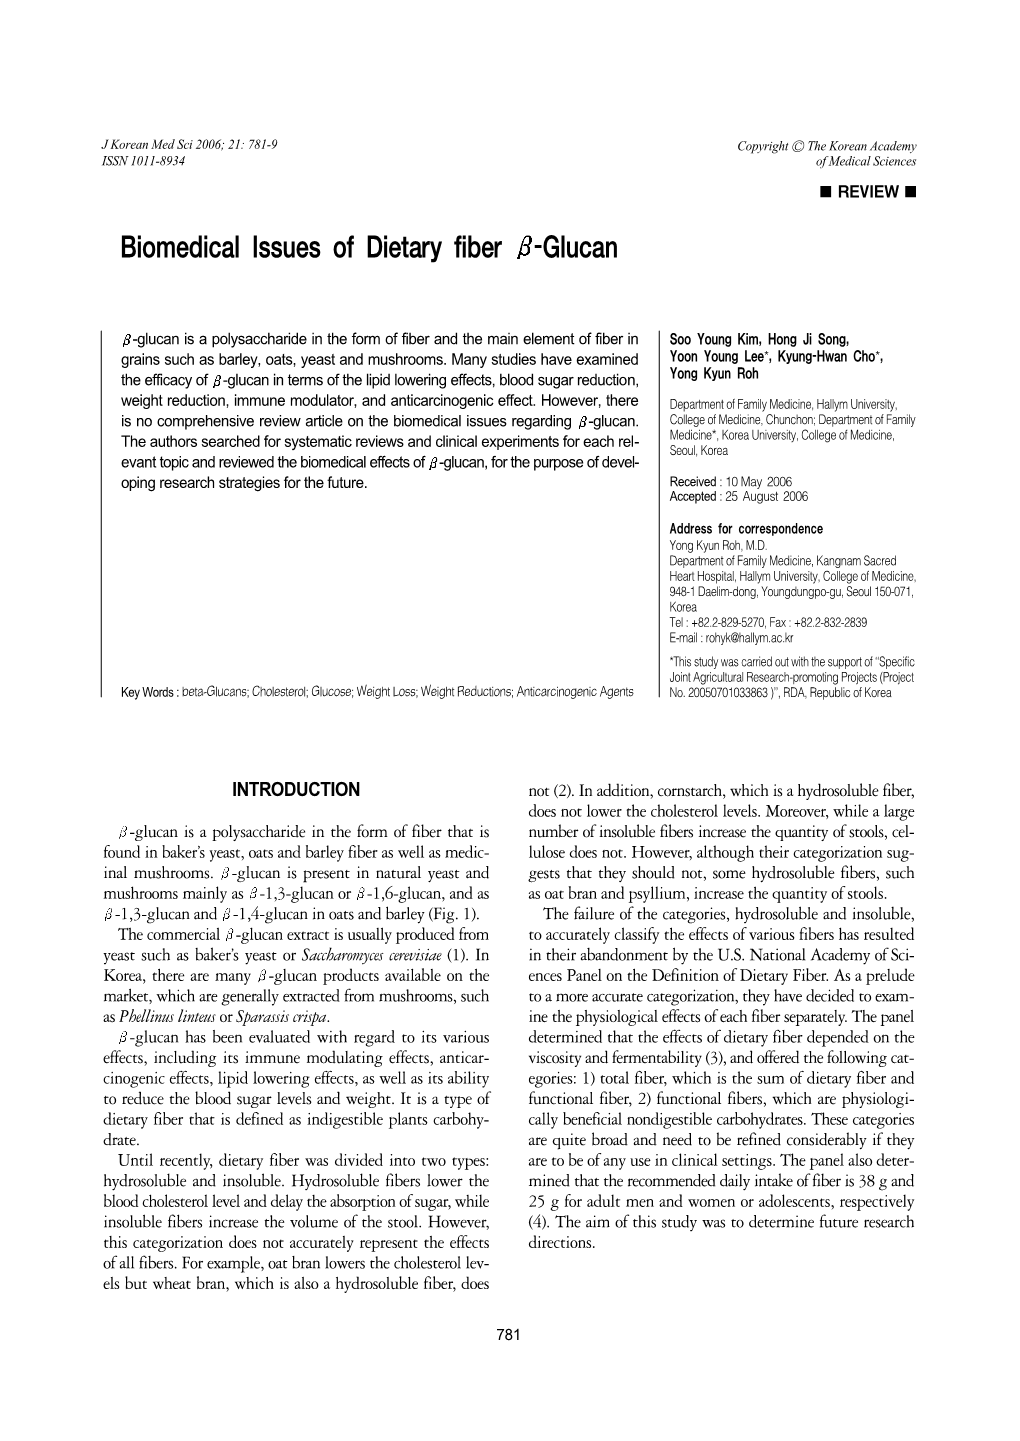 Biomedical Issues of Dietary Fiber-Glucan